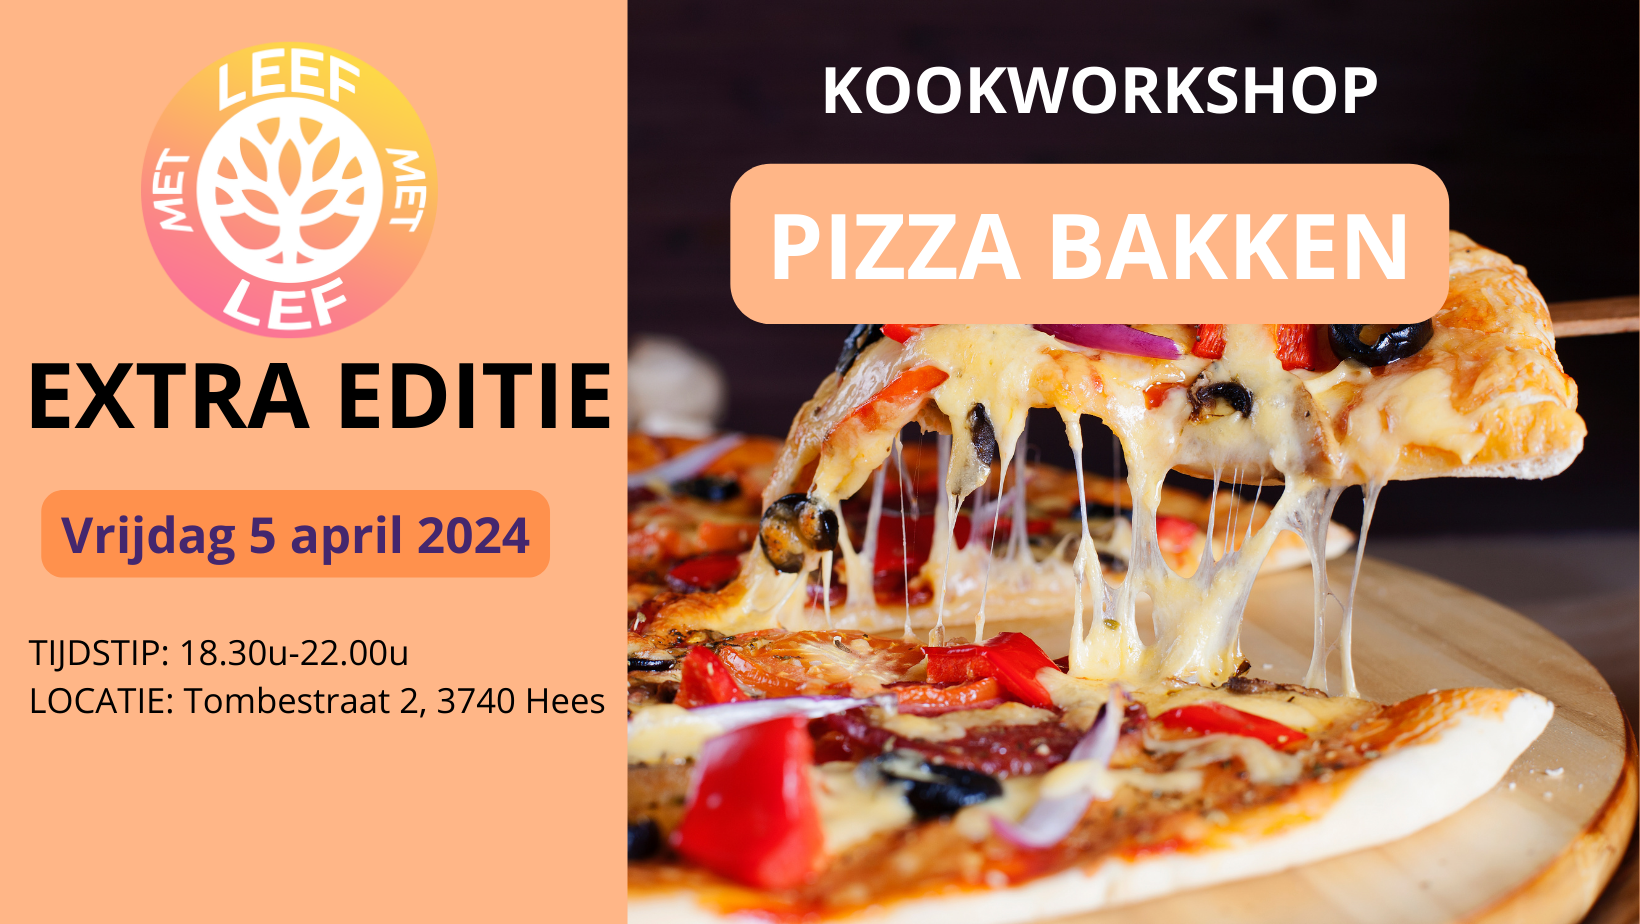 Kookworkshop: PIZZA BAKKEN (vrijdag 5 april)